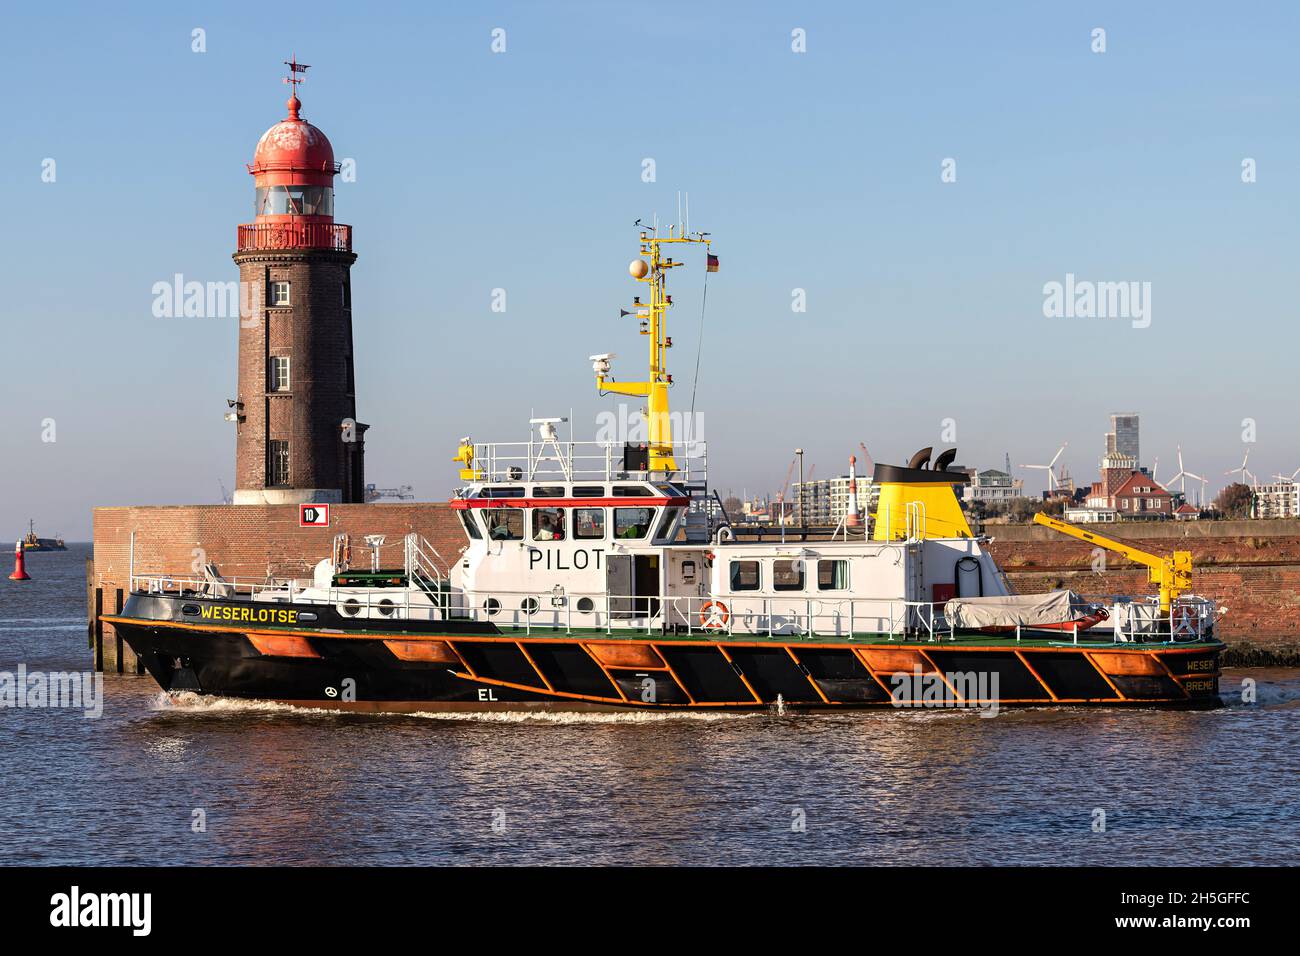 pilot tender WESERLOTSE in the port of Bremerhaven Stock Photo